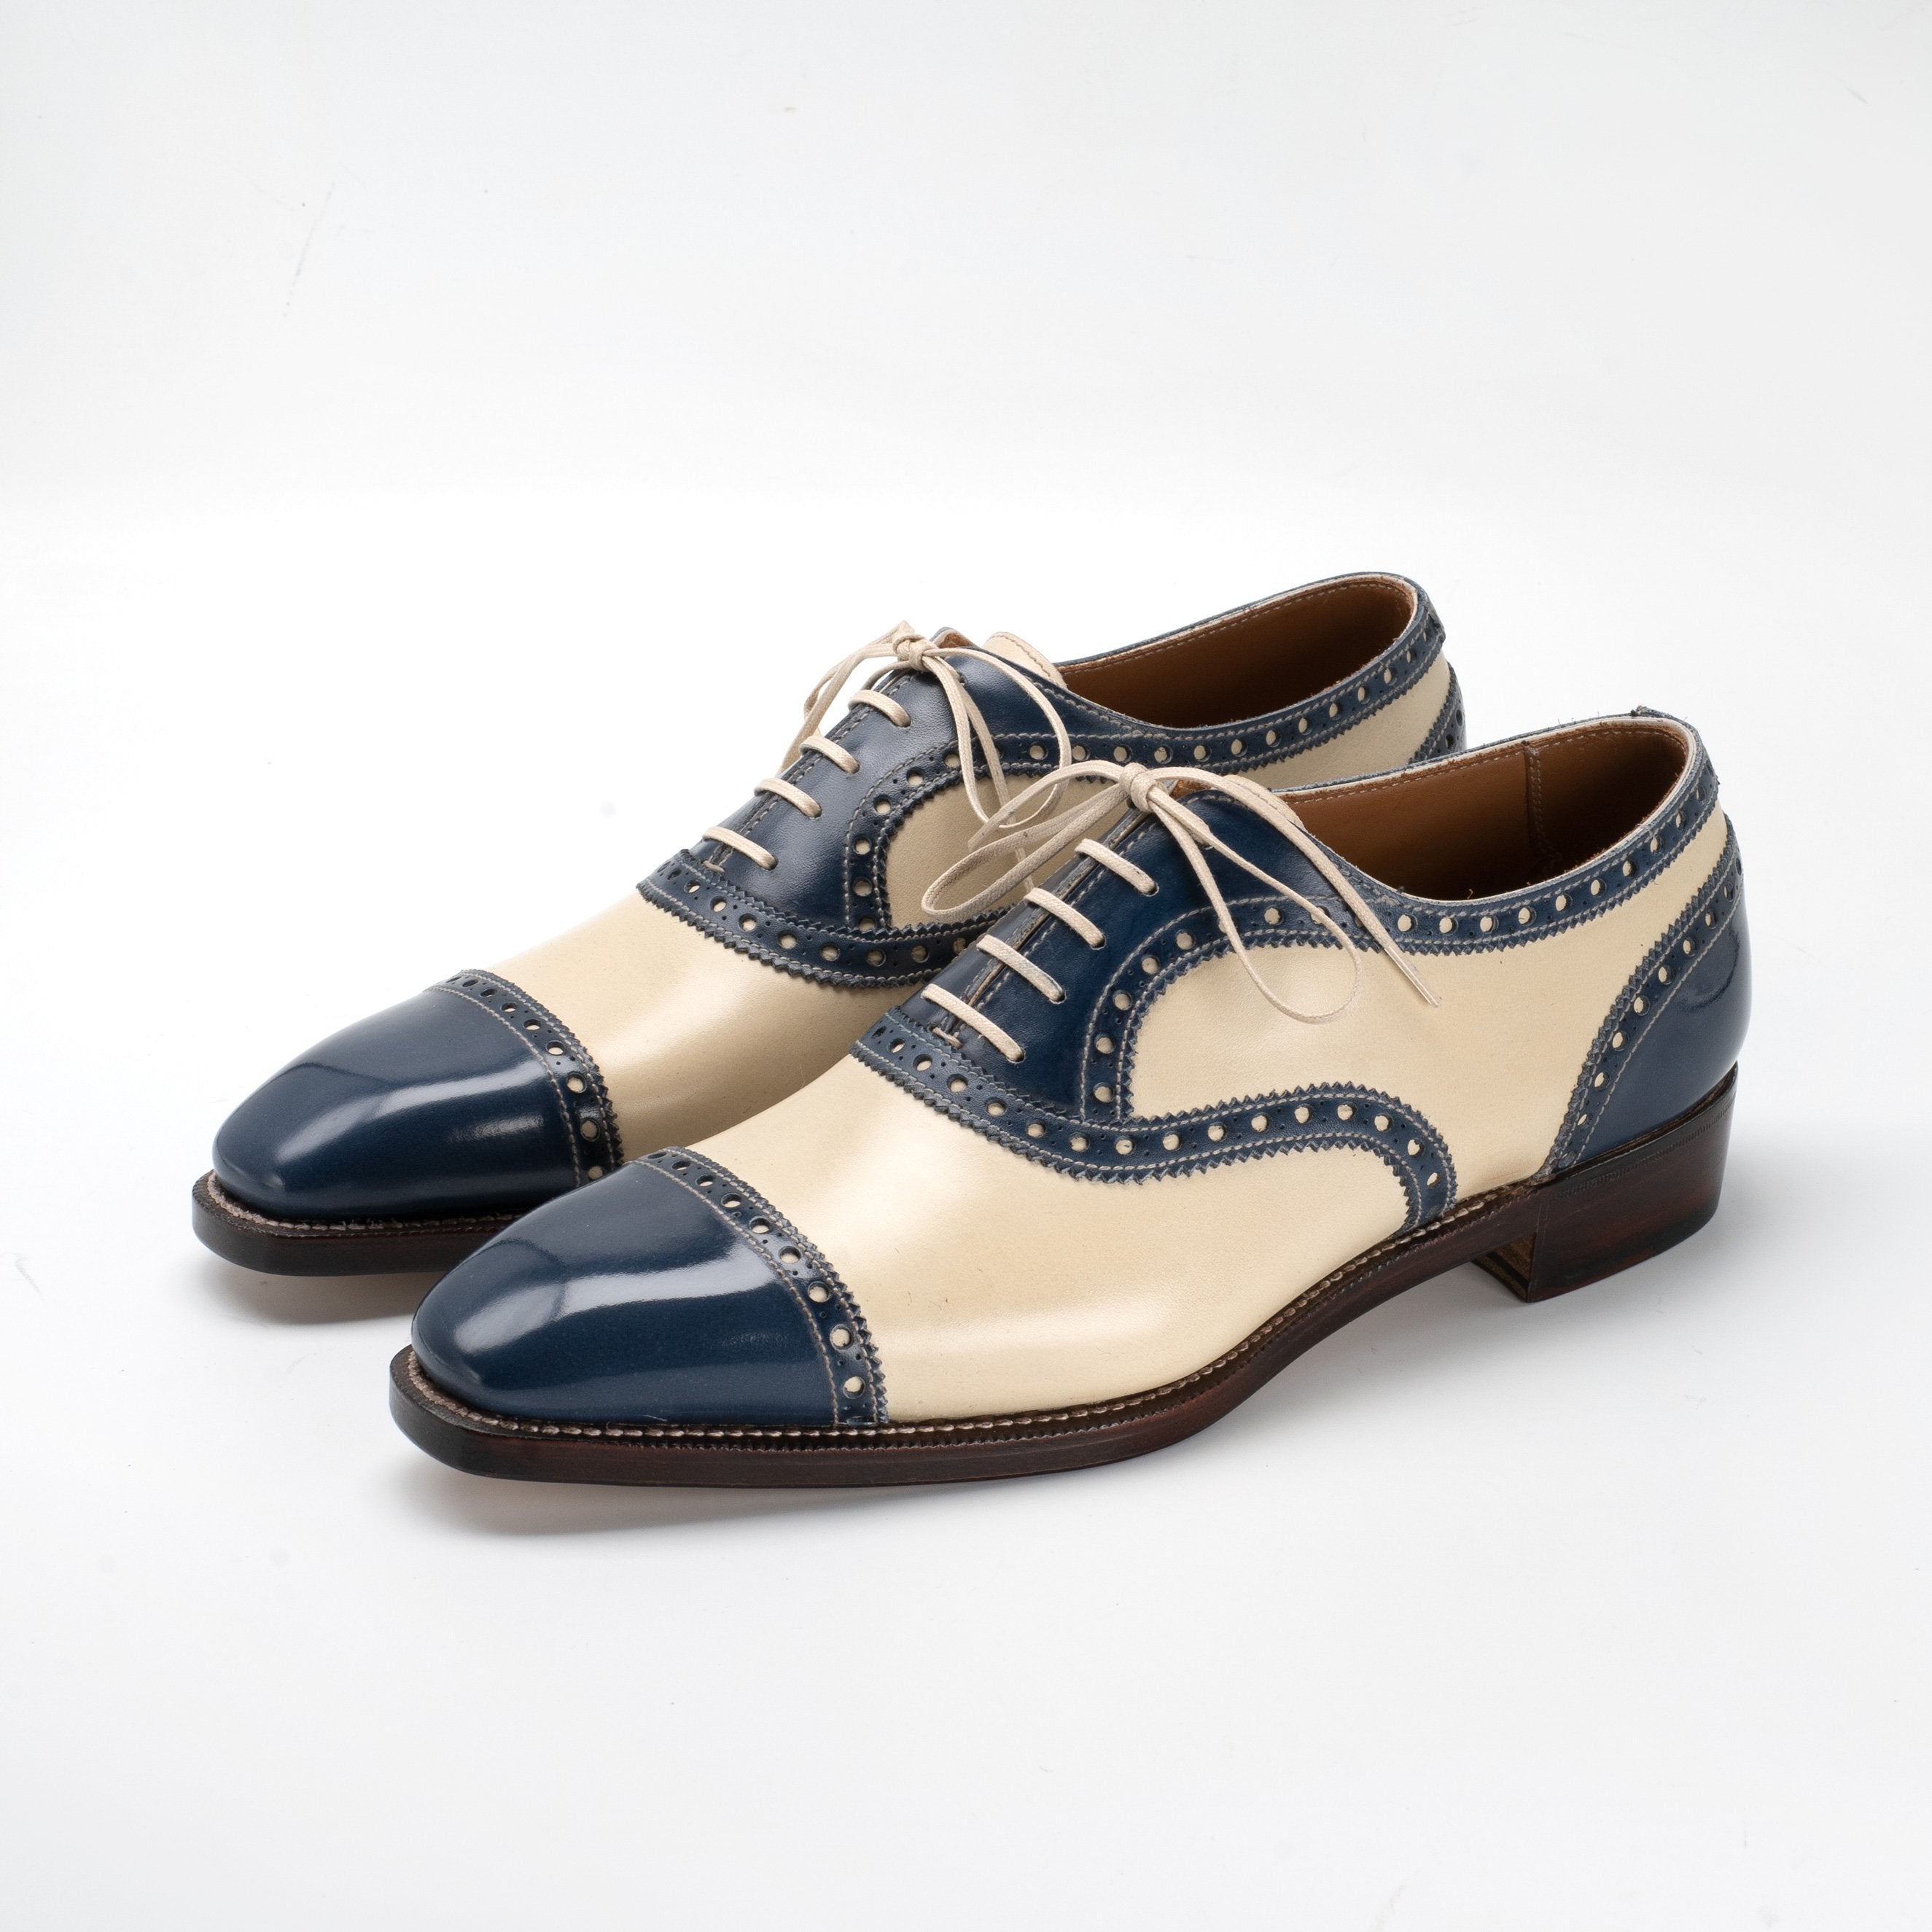 Davis Spectator Oxford Shoe | Norman Vilalta and Leffot Collaboration ...